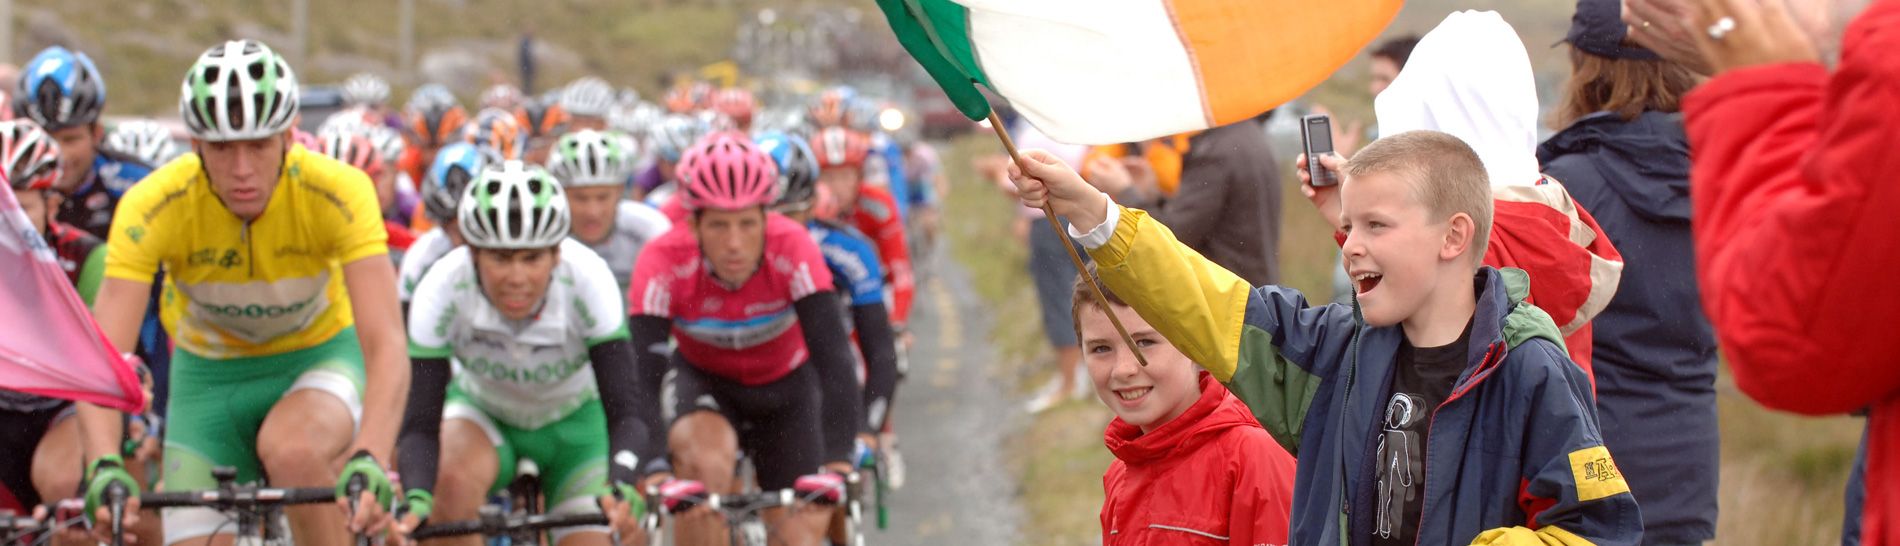 Tour of Ireland: peloton passes roadside spectators